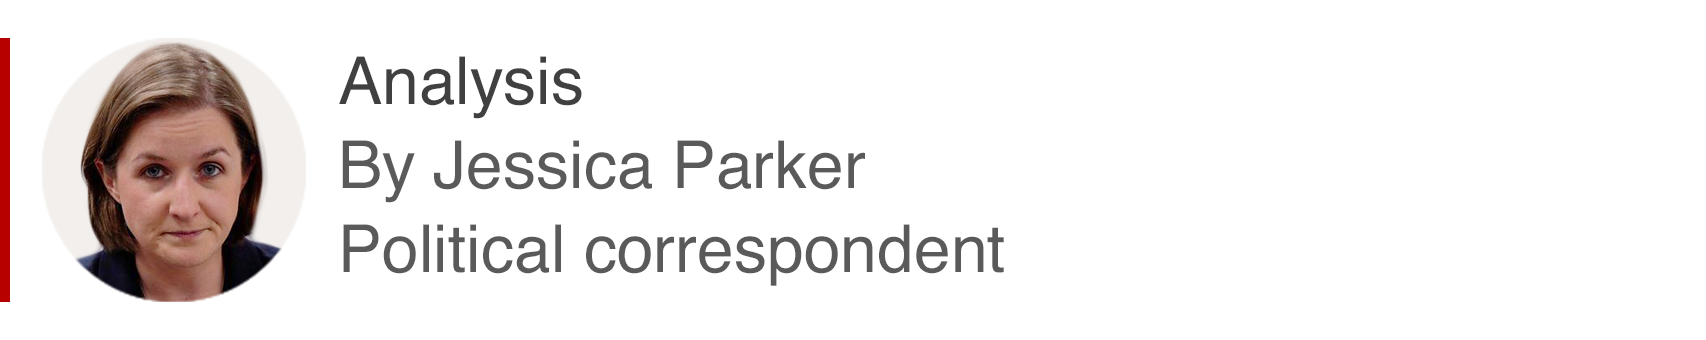 Analysis box by Jessica Parker, political correspondent